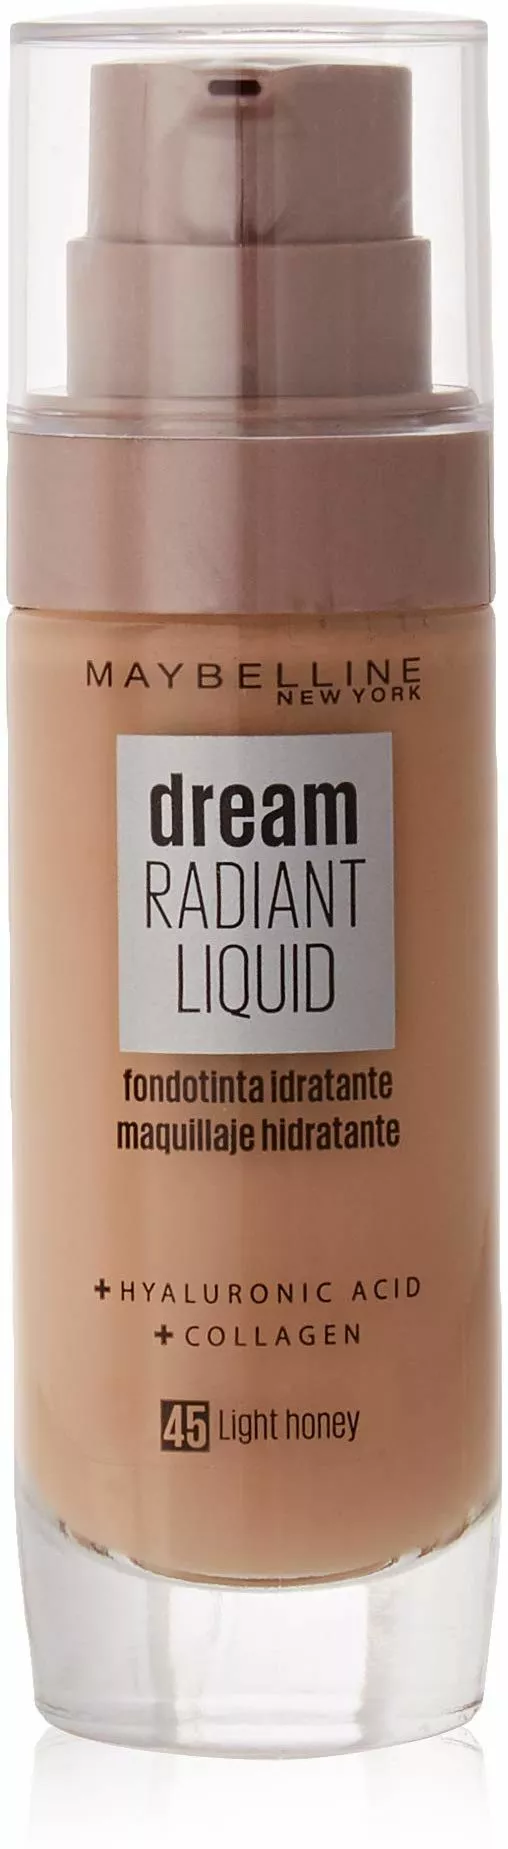 maybelline new york dream radiant liquid plynny podklad jasny odcien miodu 045 jasny miod